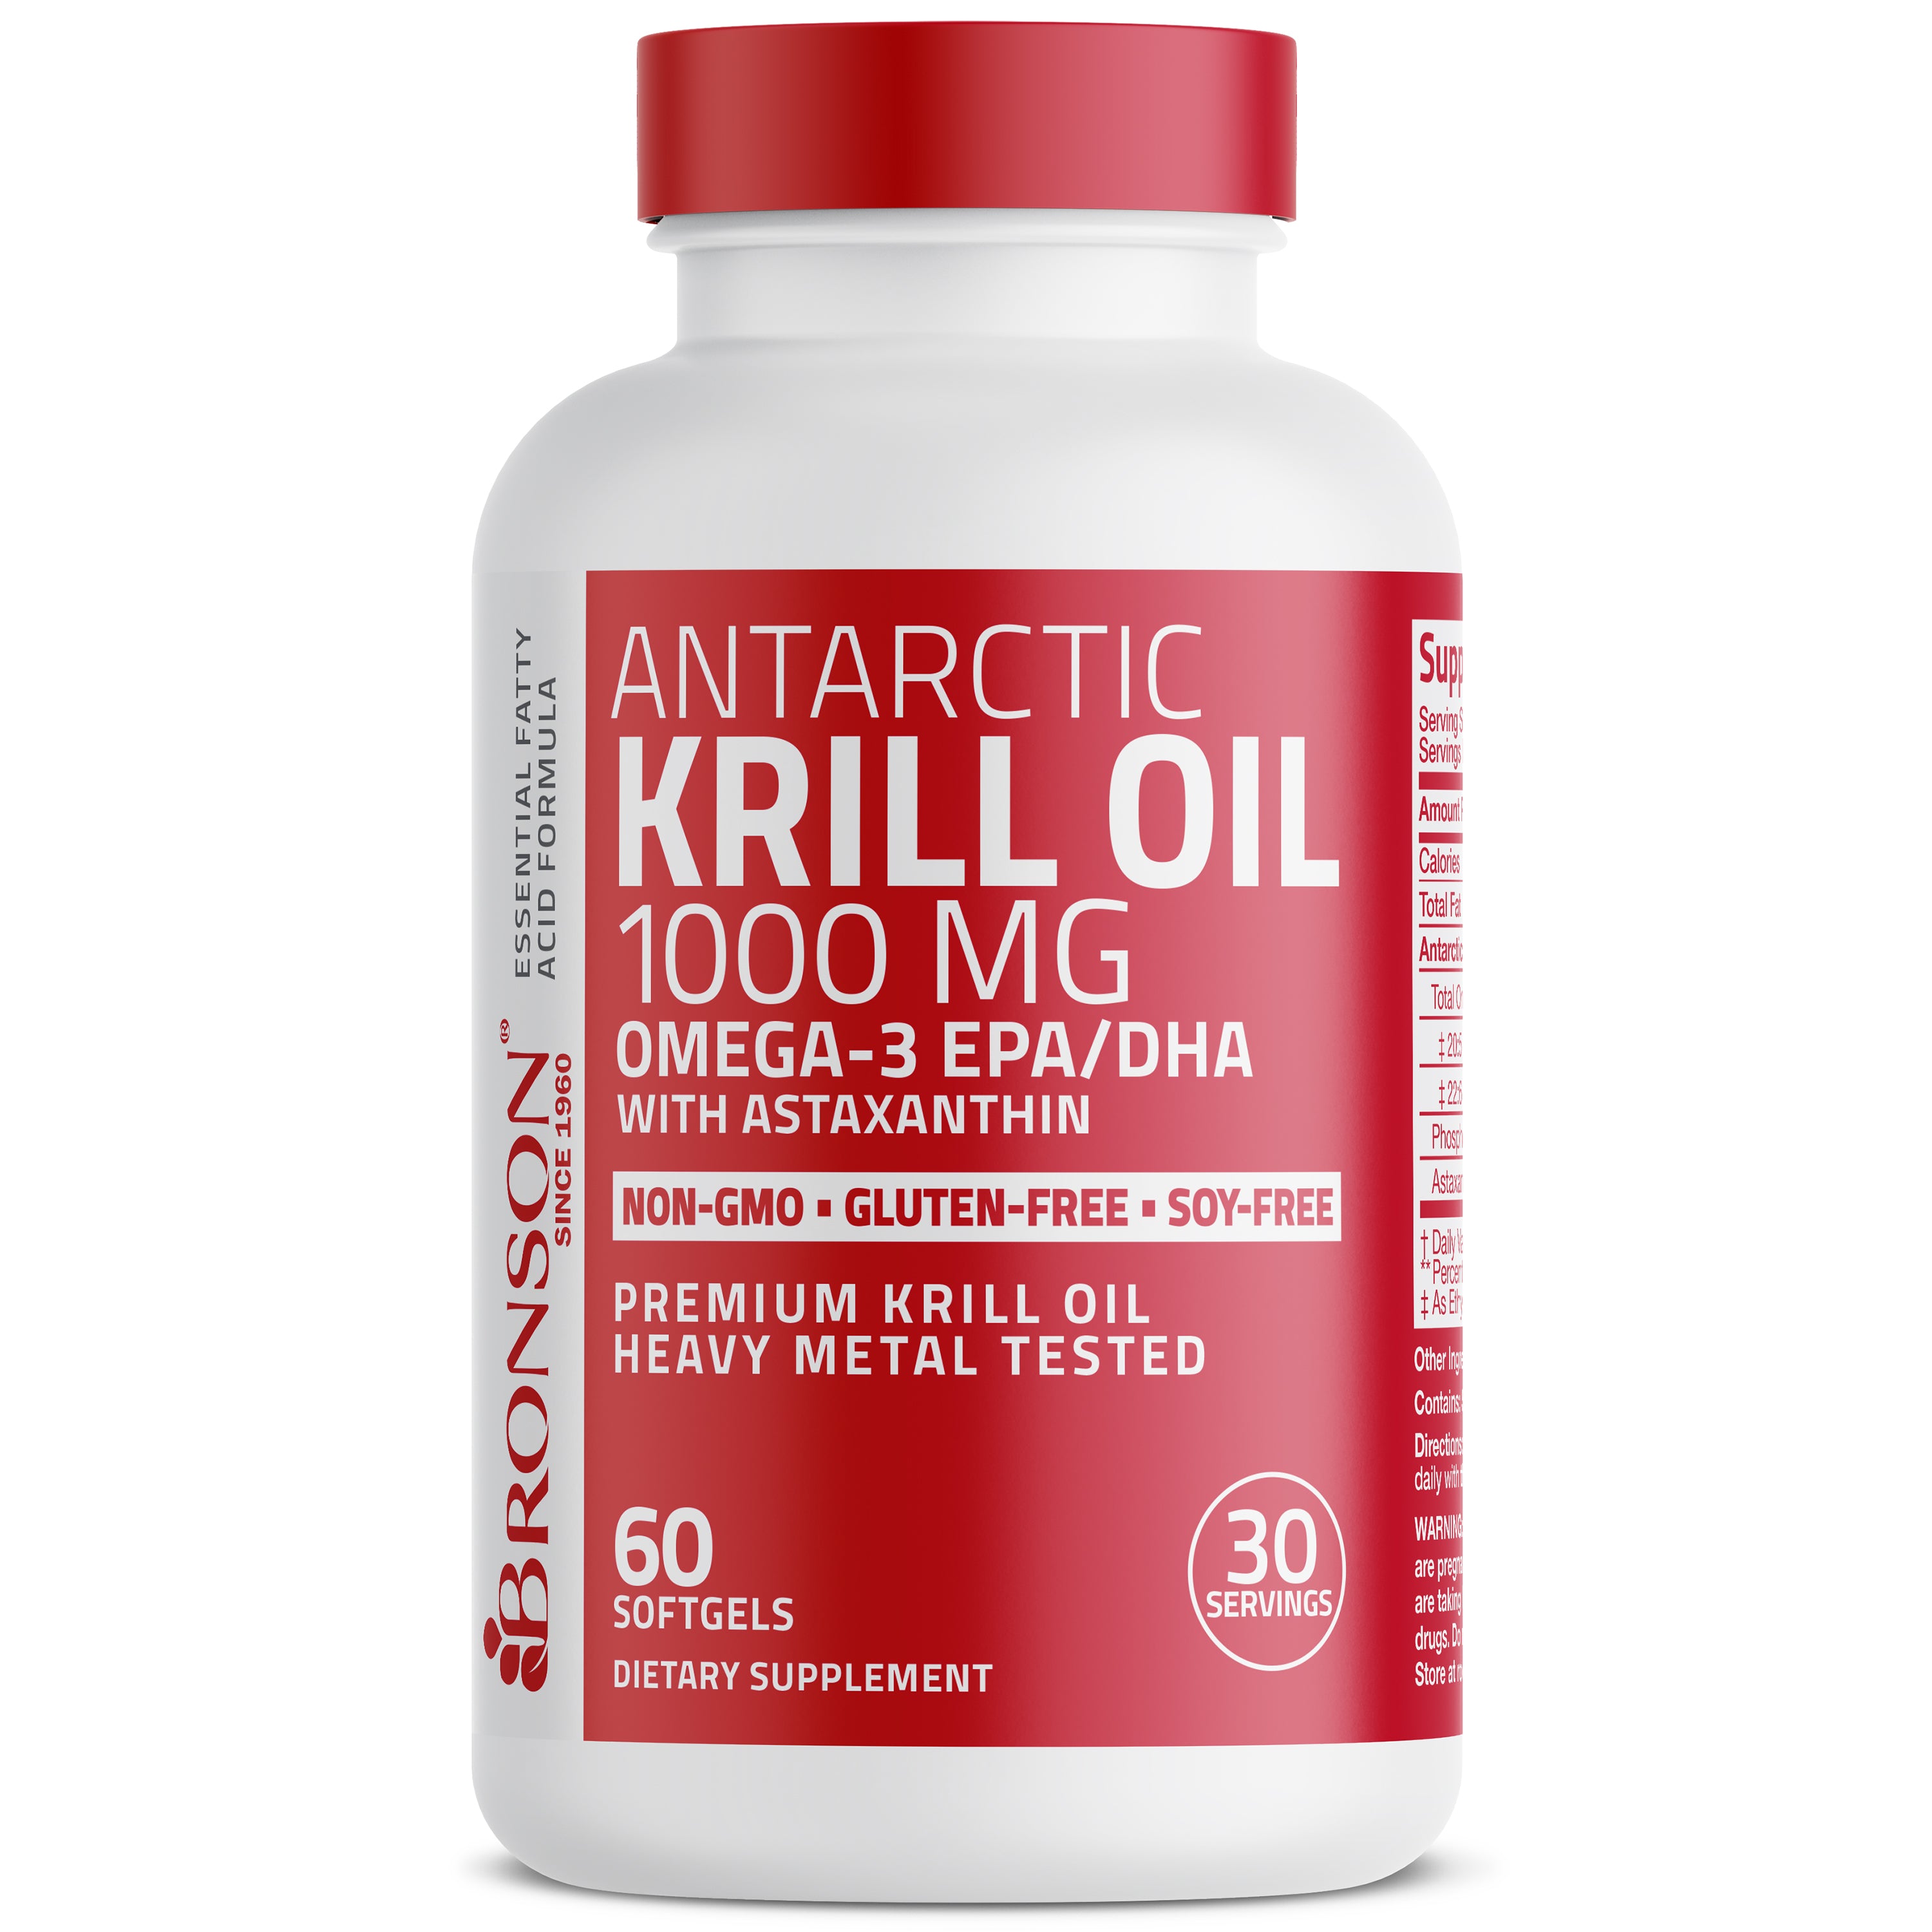 Premium Antarctic Krill Oil Omega-3 EPA DHA Non-GMO - 1,000 mg view 3 of 6